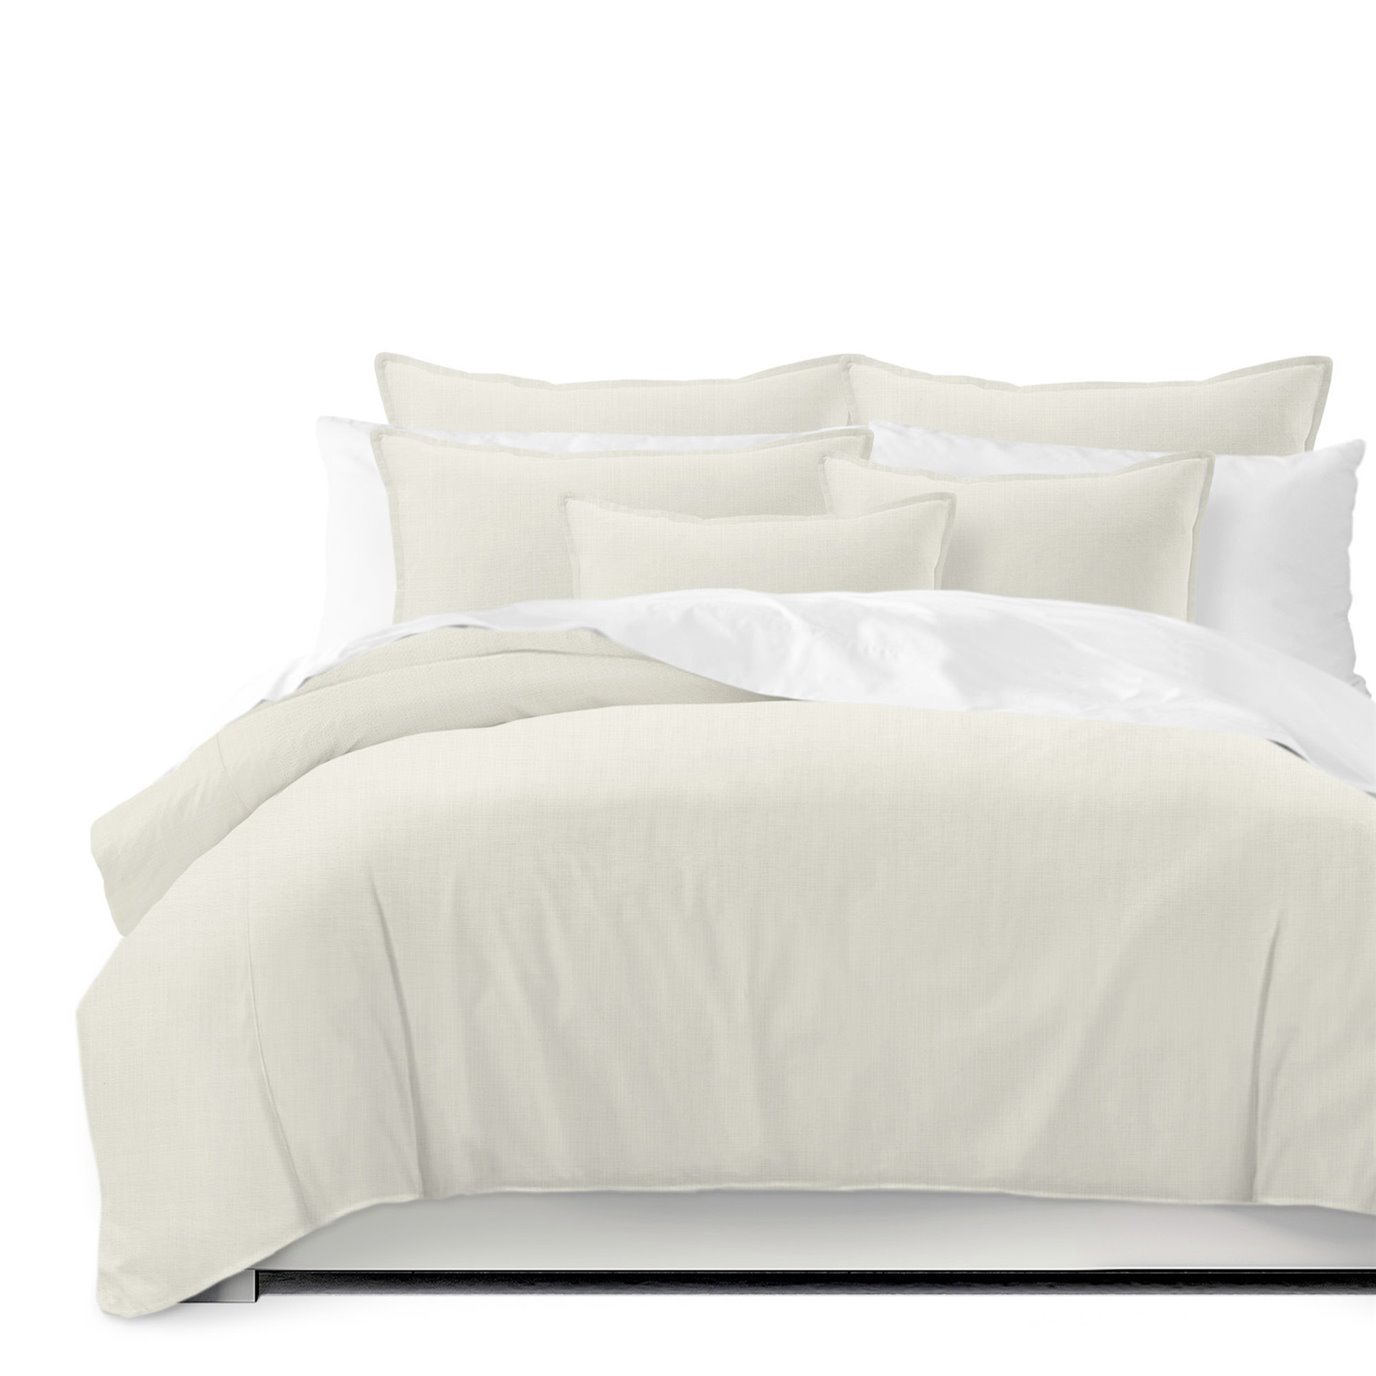 Ancebridge Vanilla Comforter and Pillow Sham(s) Set - Size Super Queen